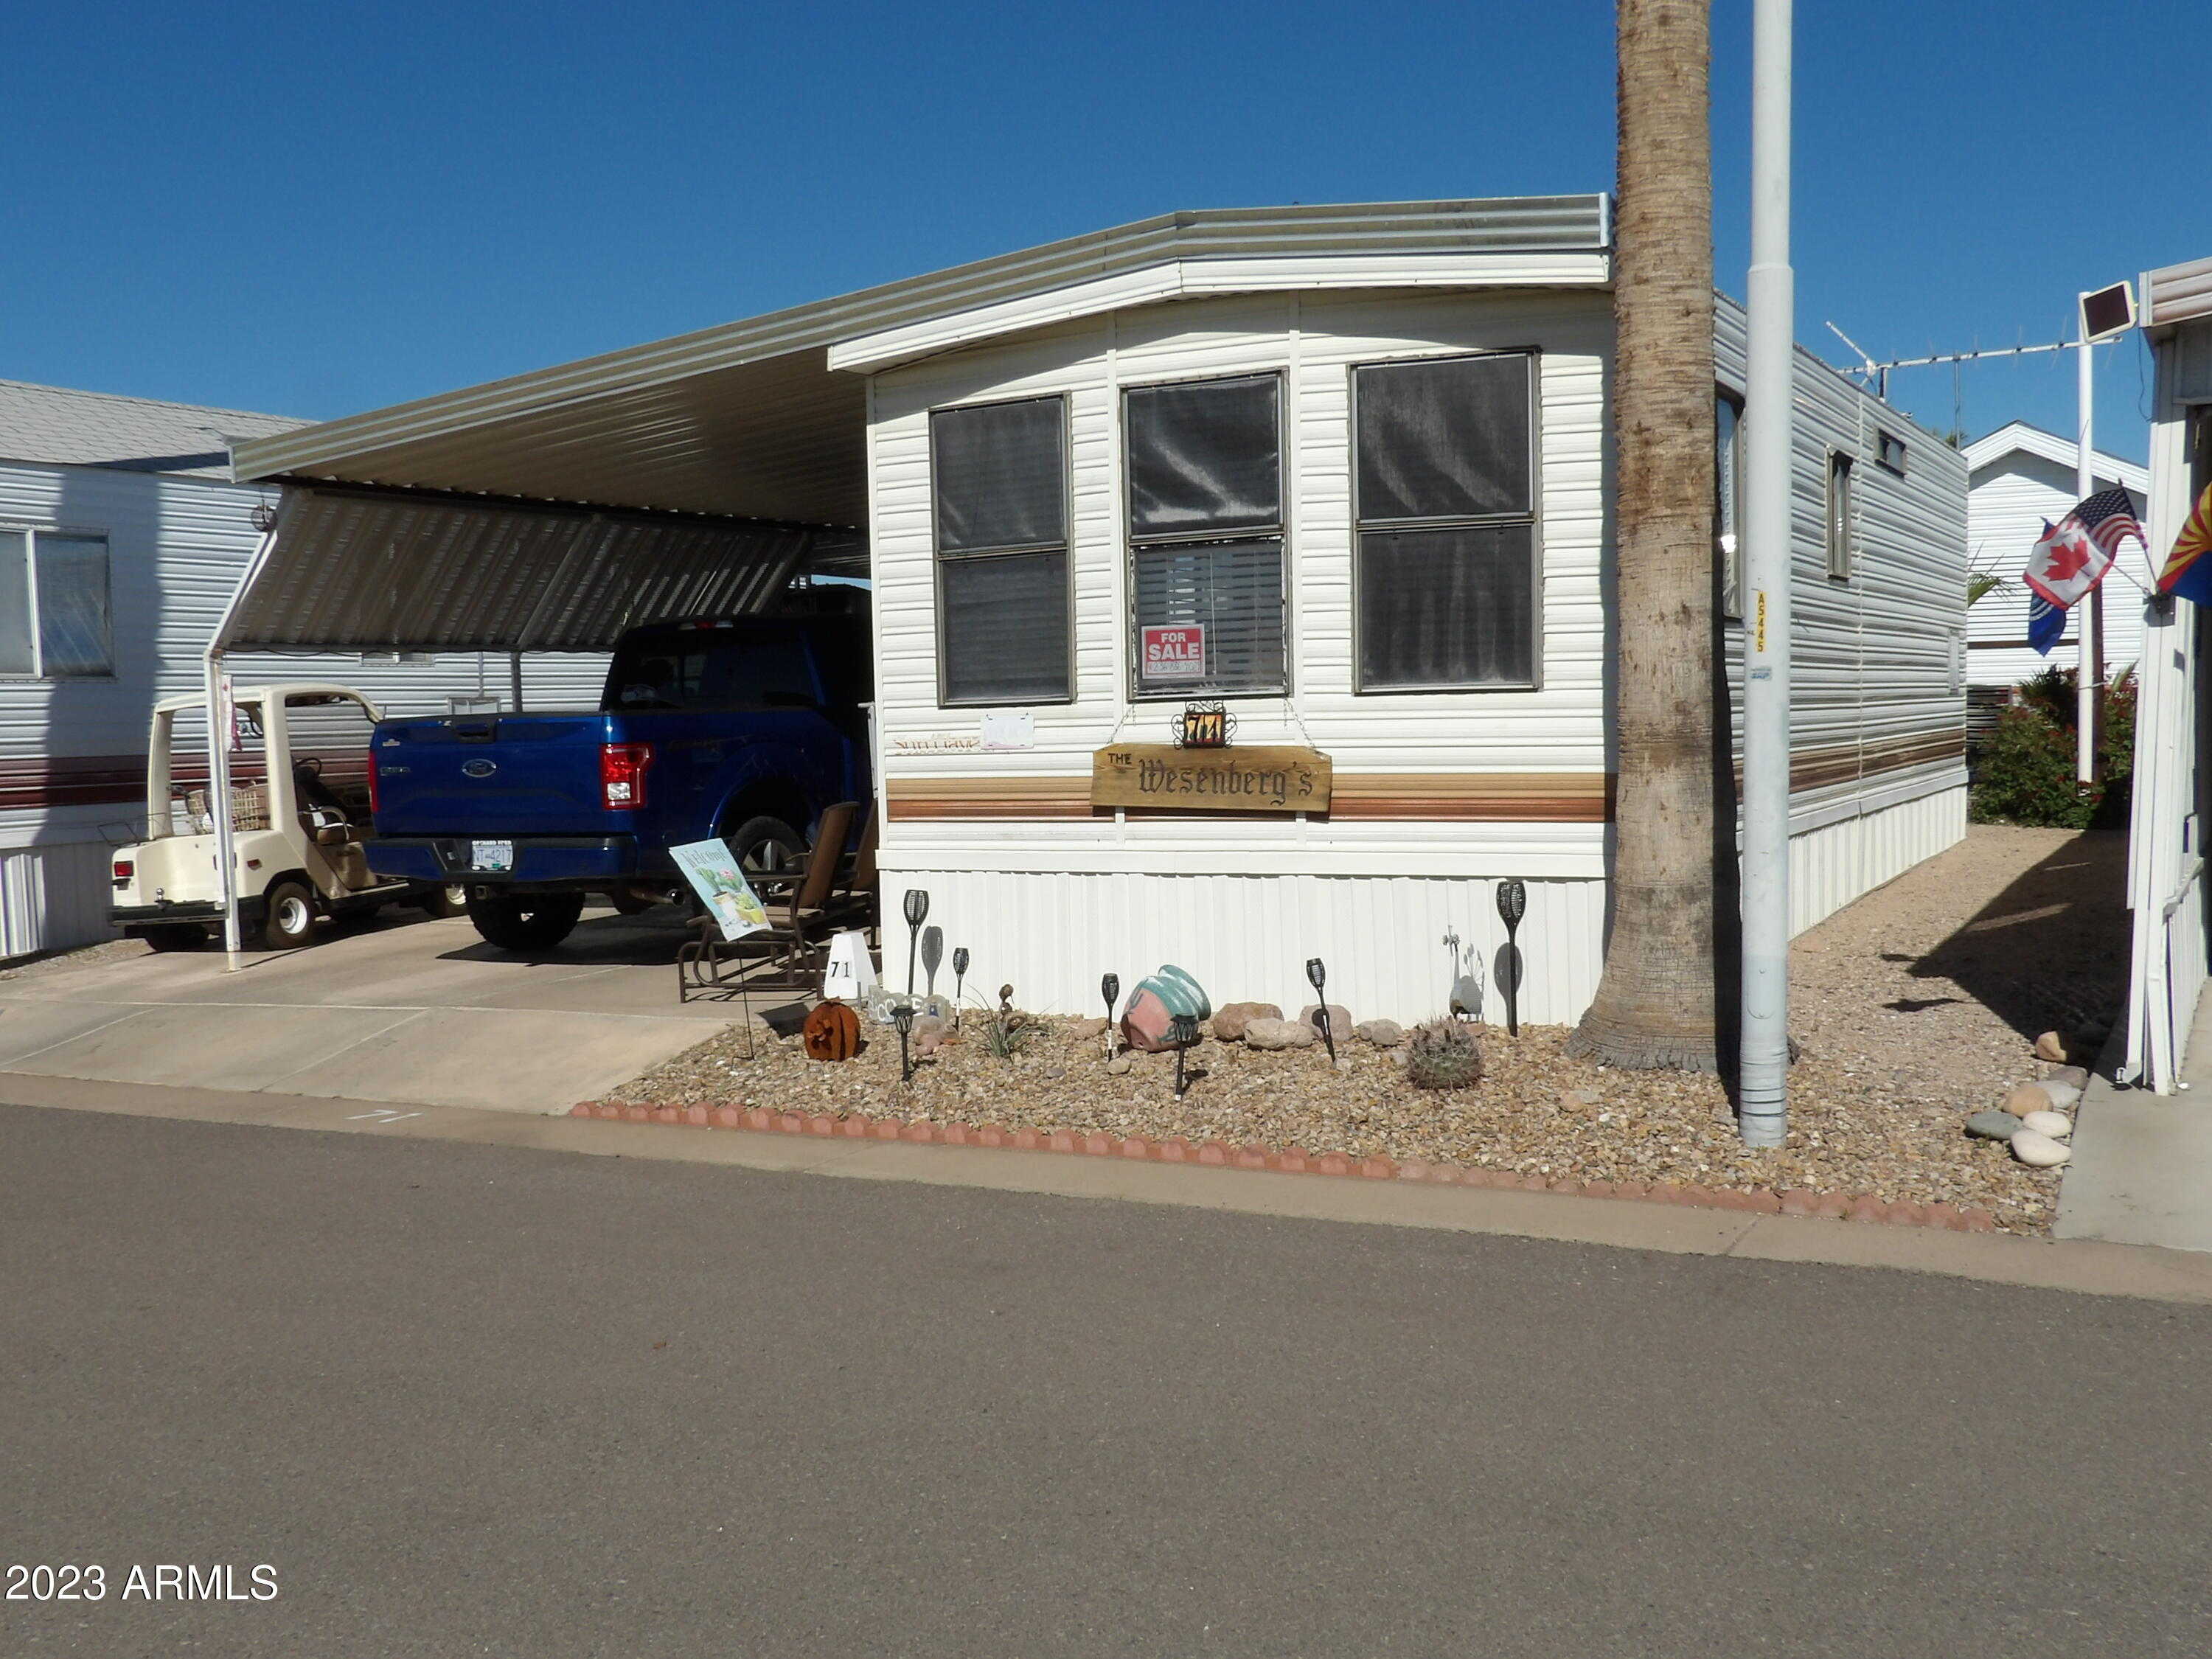 View Apache Junction, AZ 85120 mobile home